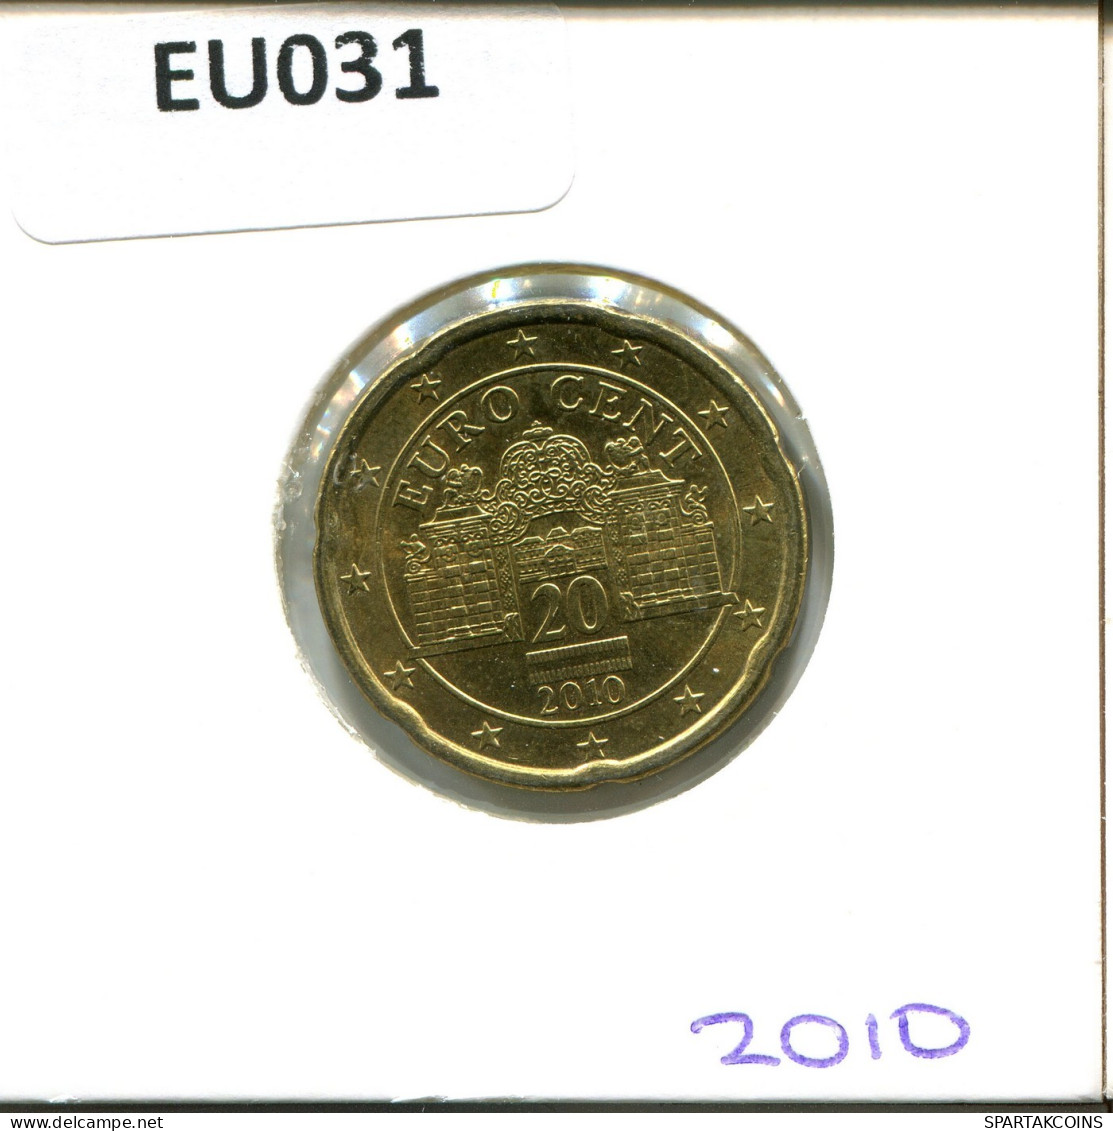 20 EURO CENTS 2010 AUSTRIA Coin #EU031.U.A - Austria